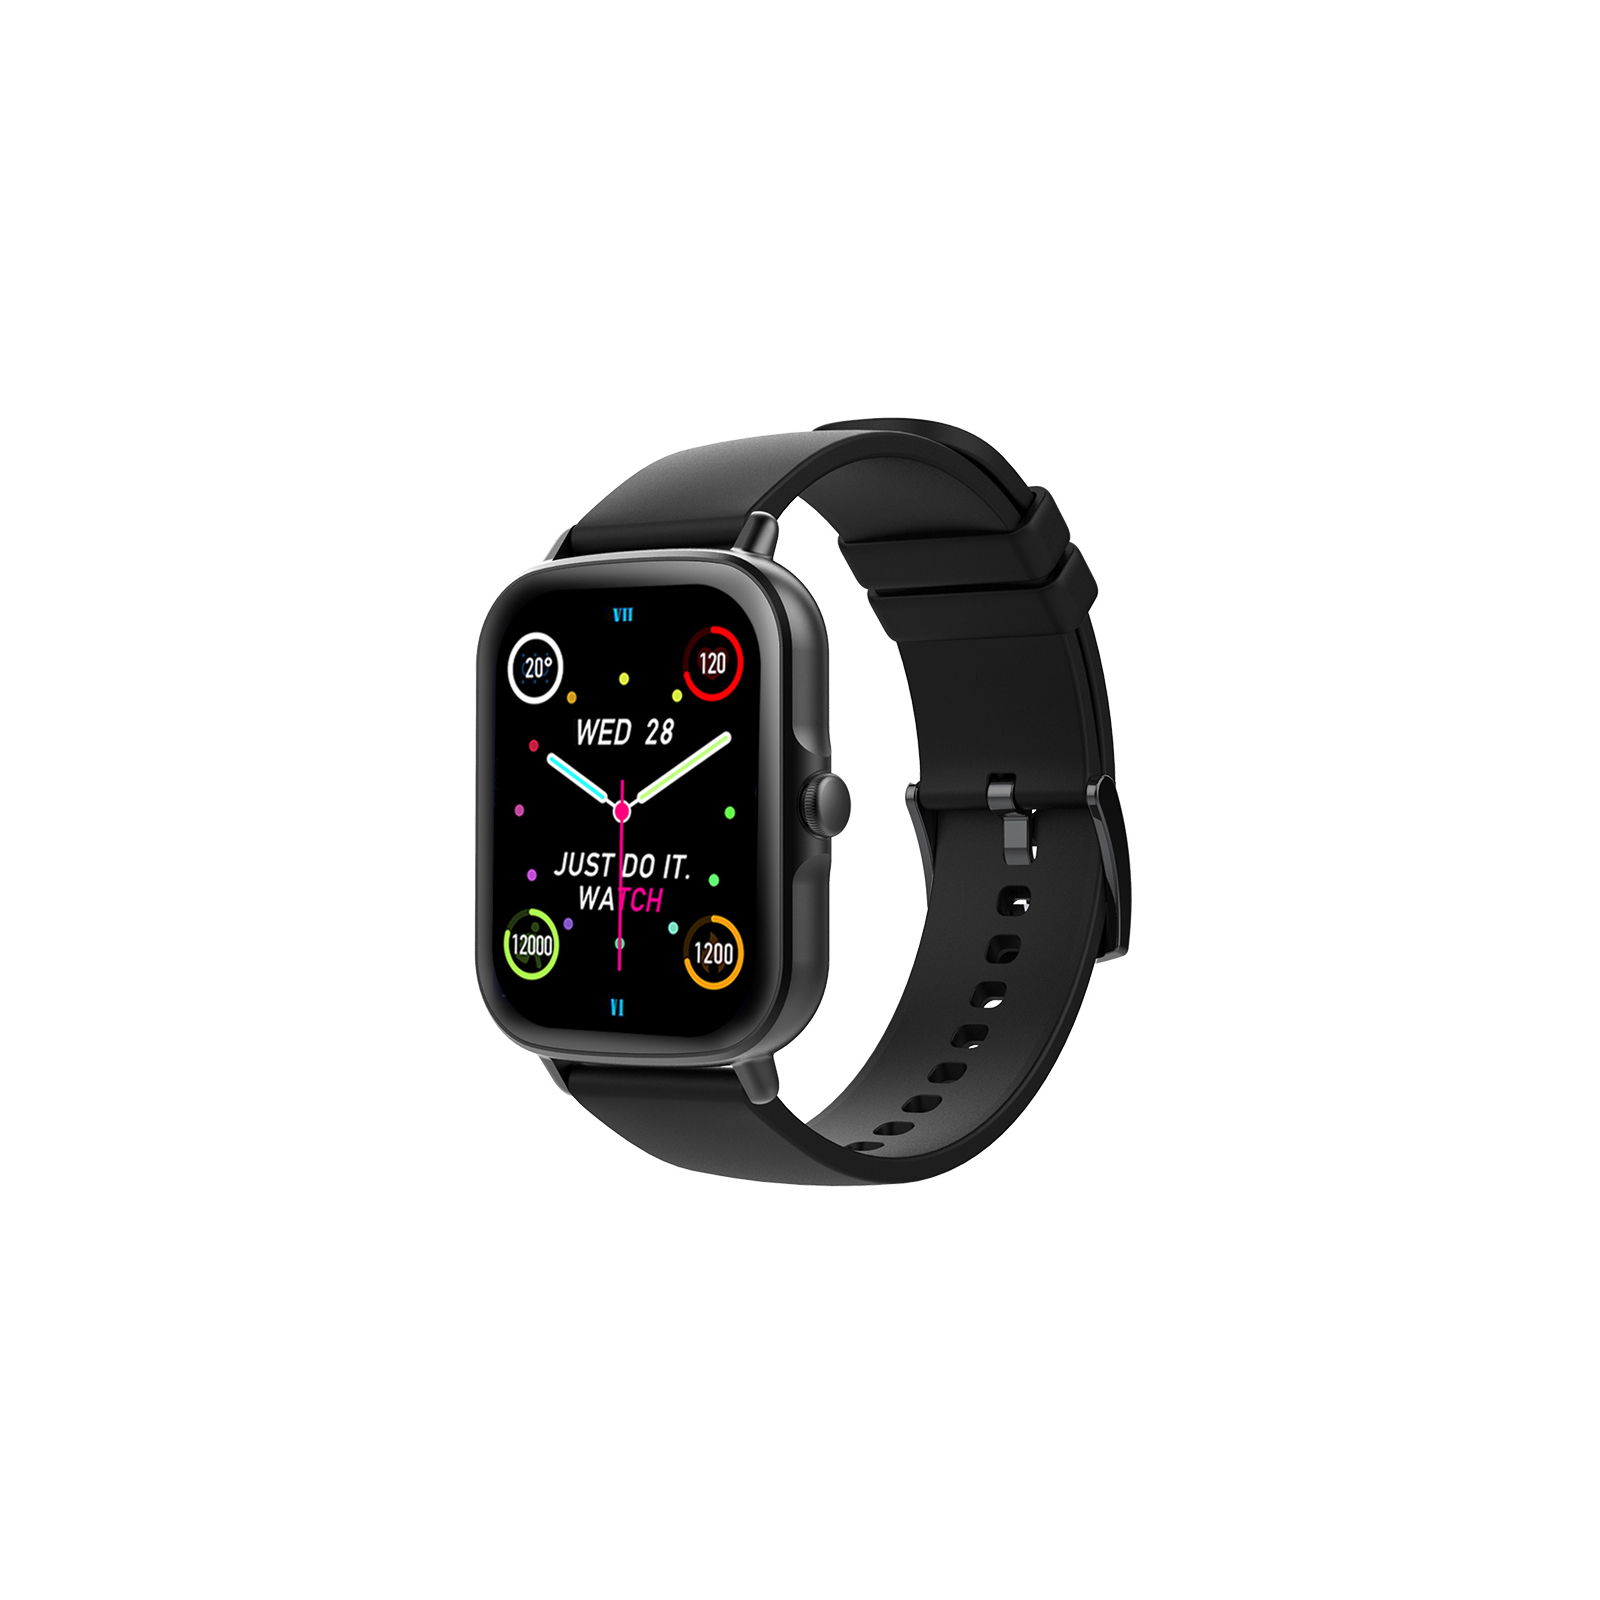 Смарт-часы Globex Smart Watch Me Pro (gold)